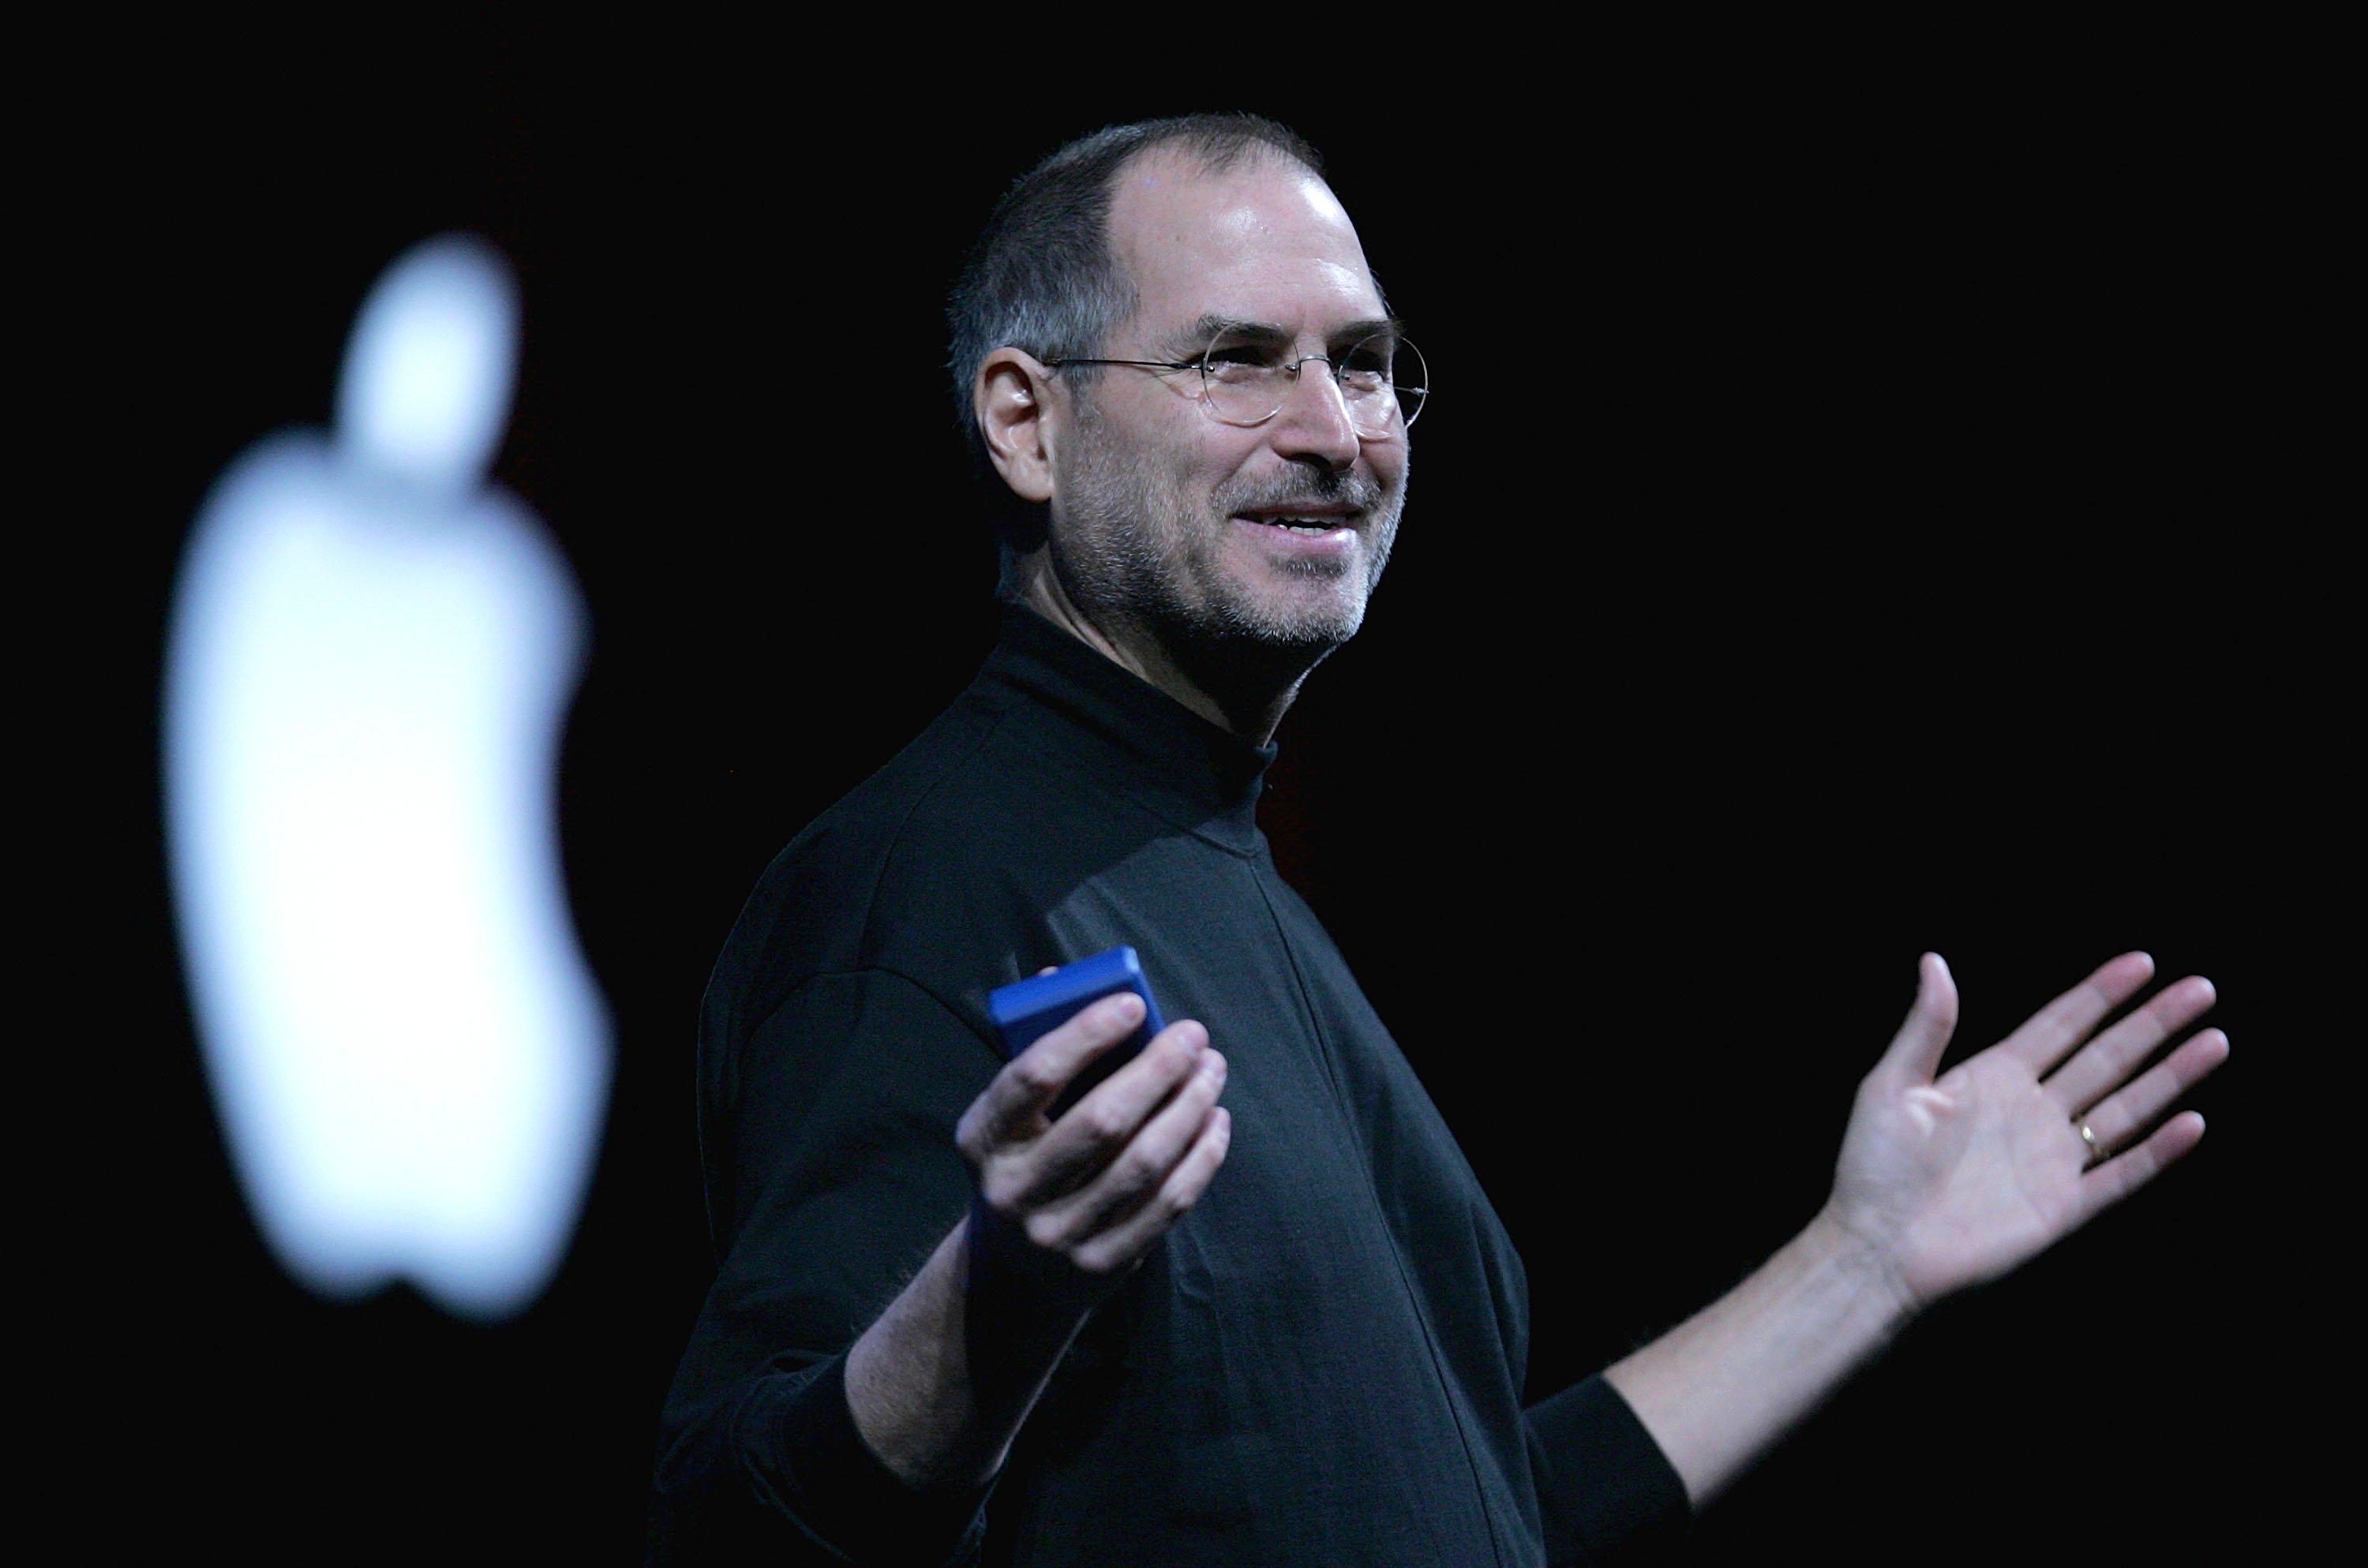 Steve Jobs delivers a keynote address in 2005